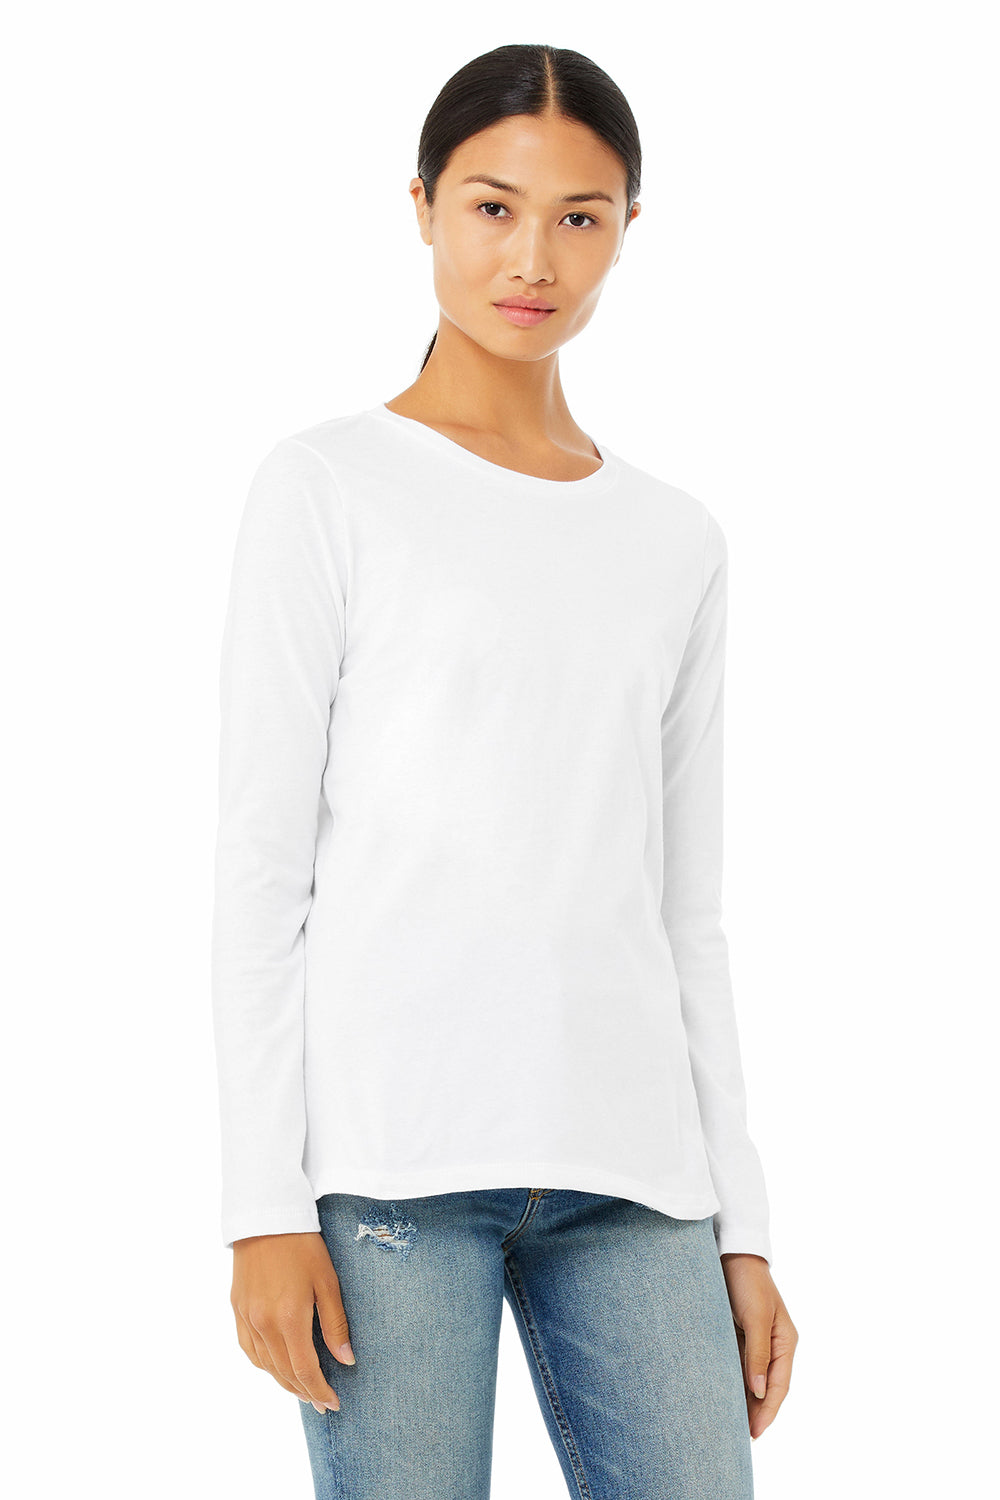 Bella + Canvas B6500/6500 Womens Jersey Long Sleeve Crewneck T-Shirt White Model Front